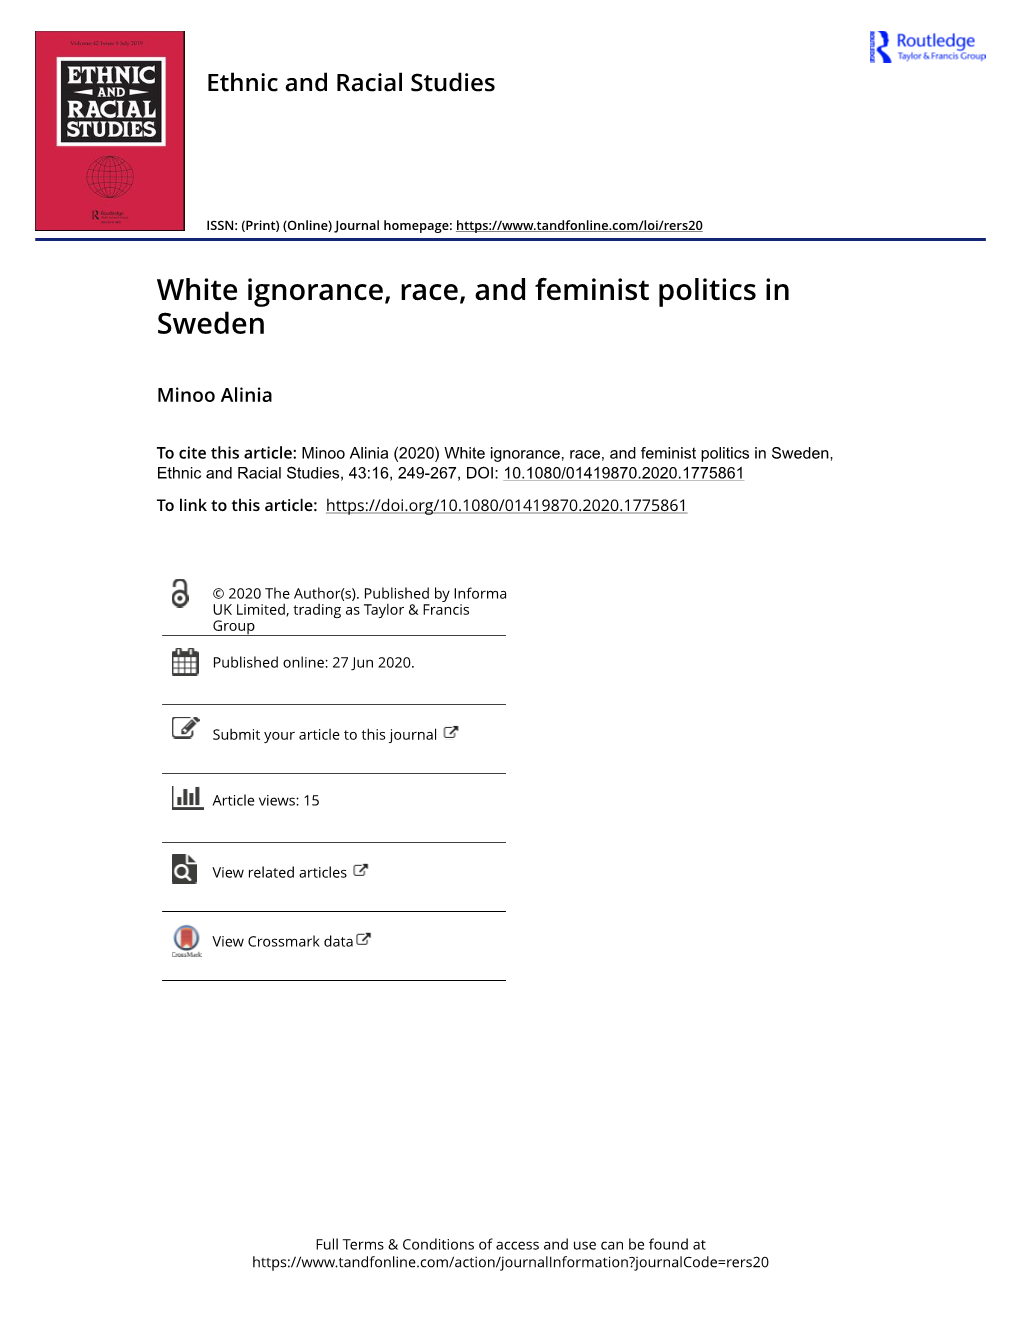 White Ignorance, Race, and Feminist Politics in Sweden